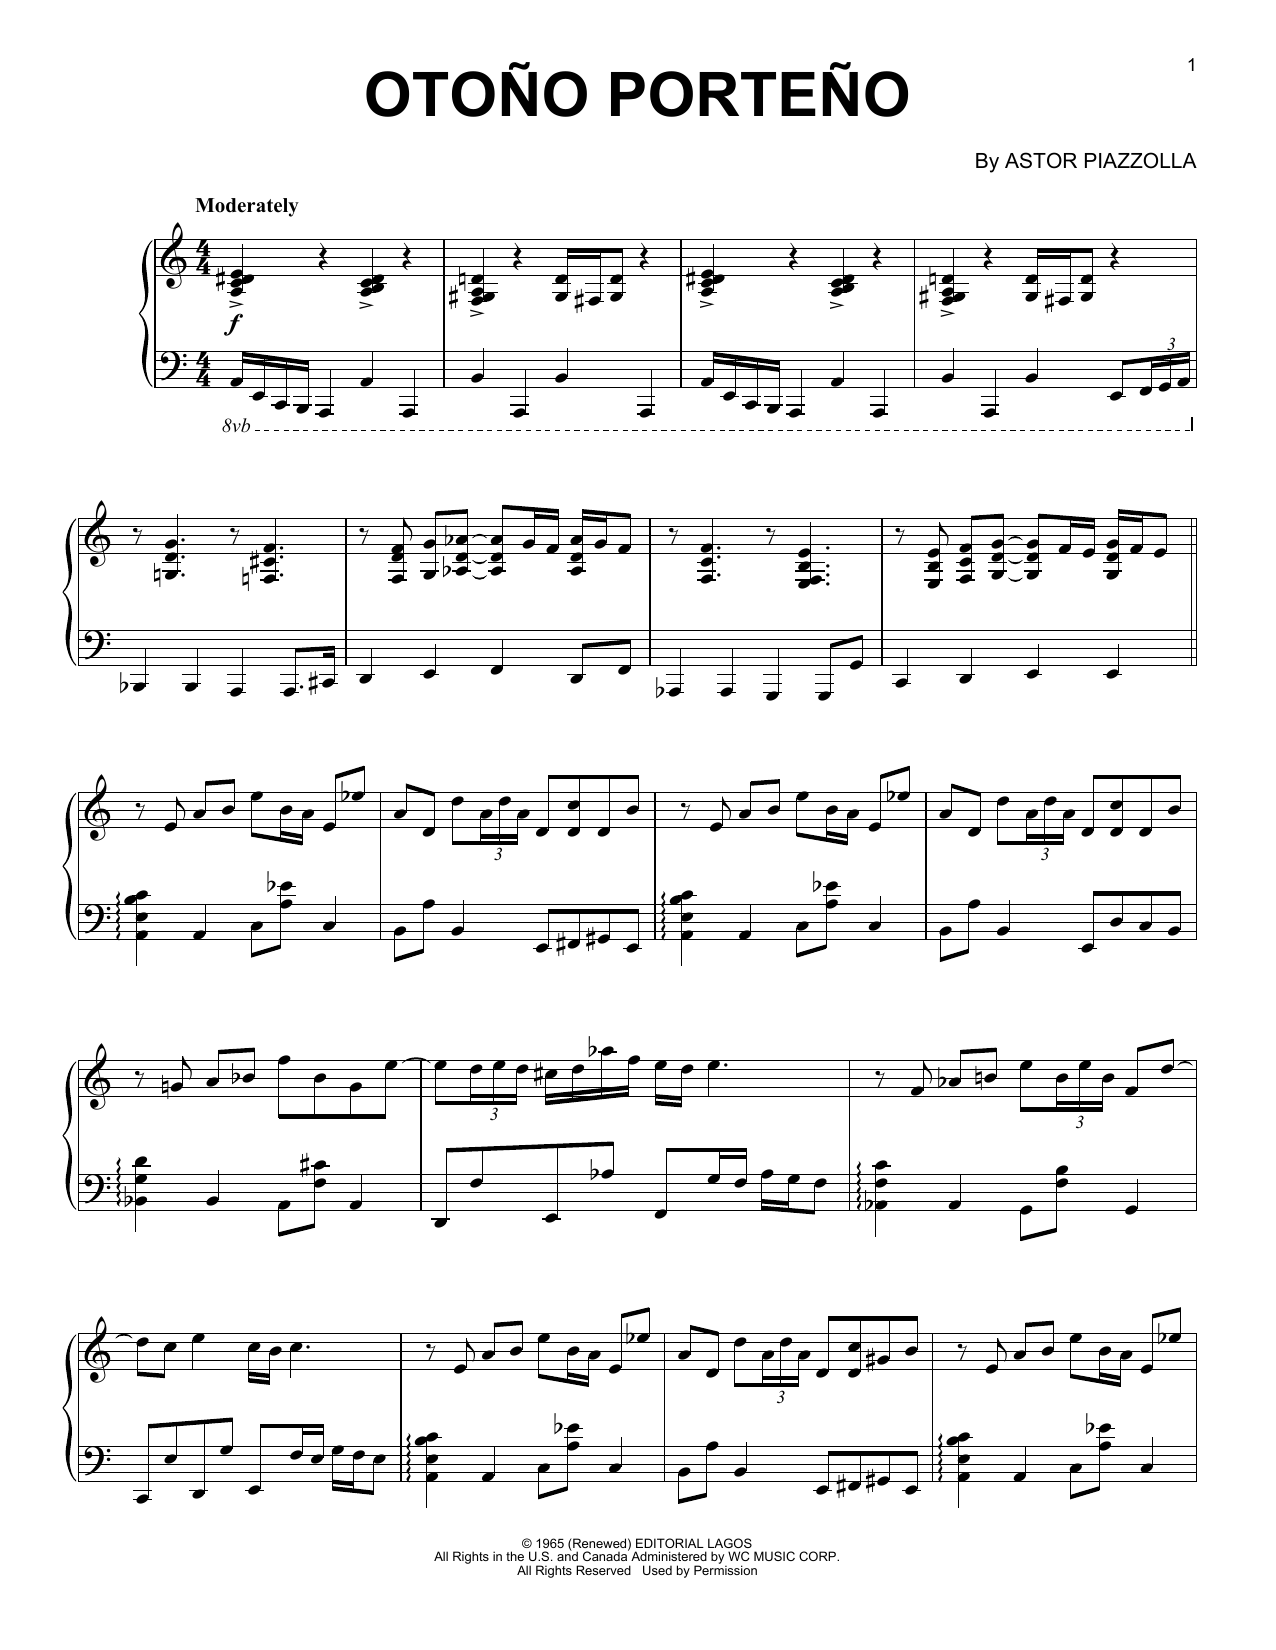 Astor Piazzolla Otono Porteno Sheet Music Notes & Chords for Piano Solo - Download or Print PDF